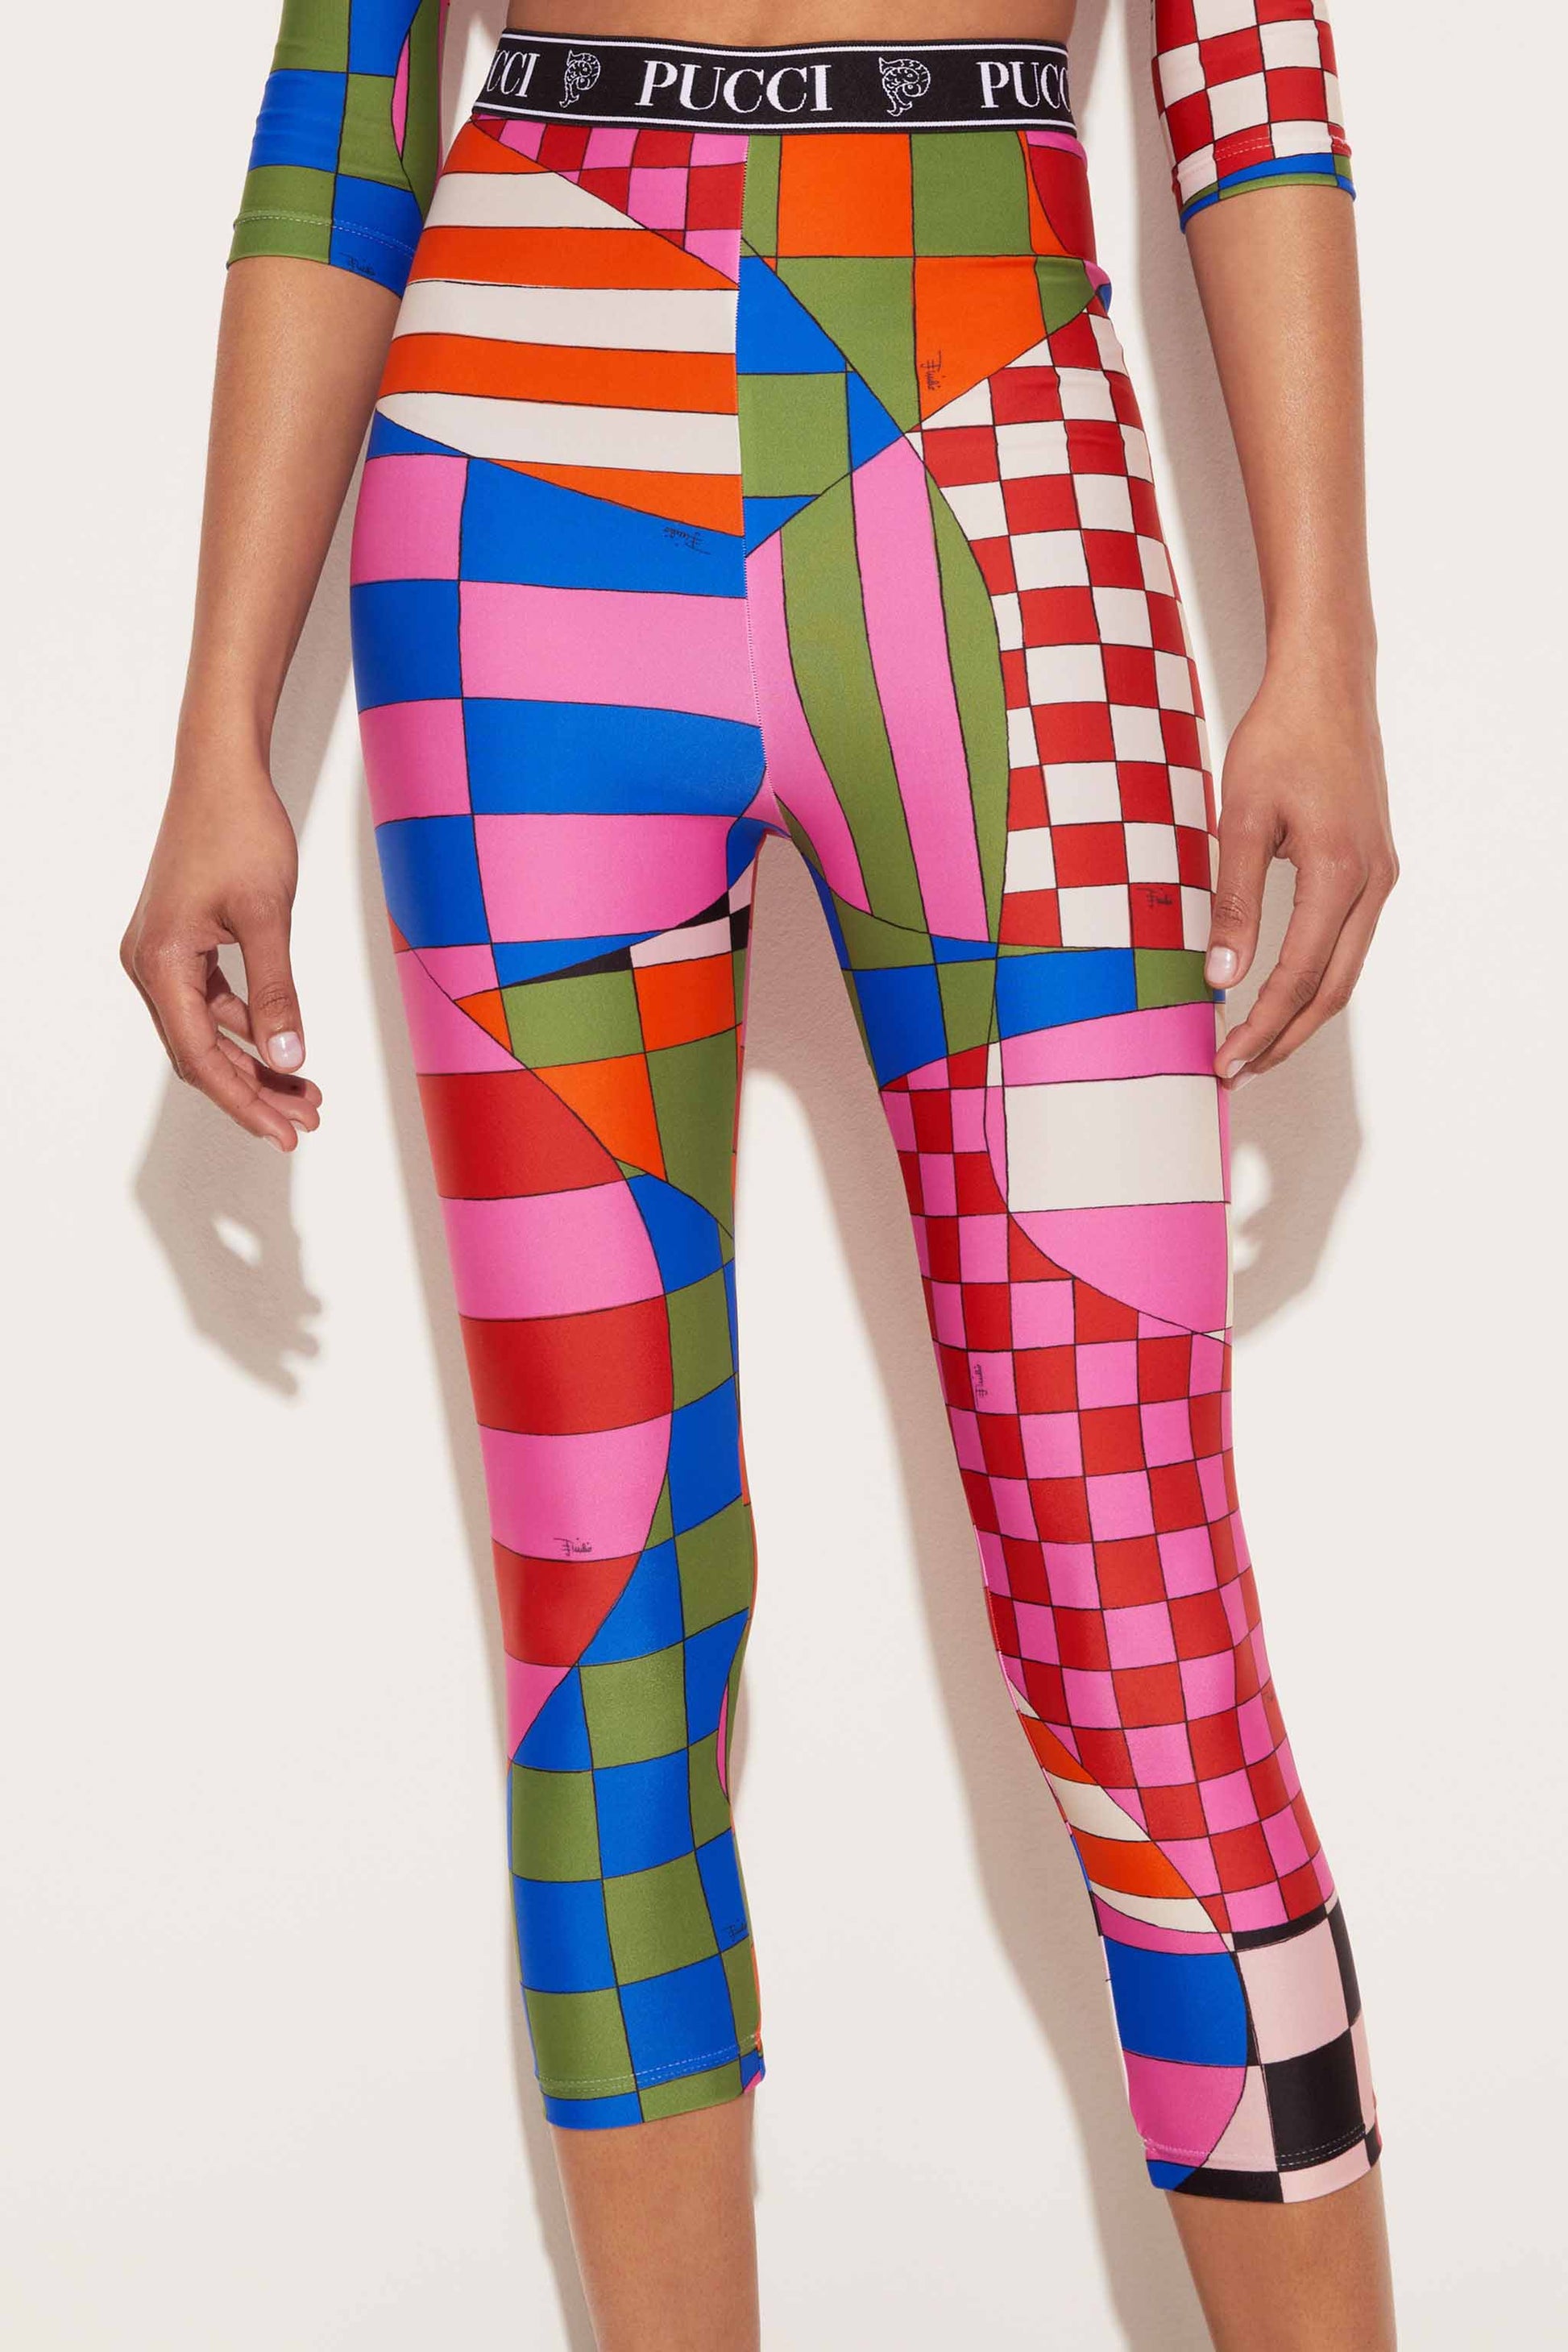 Pucci - High-rise printed leggings